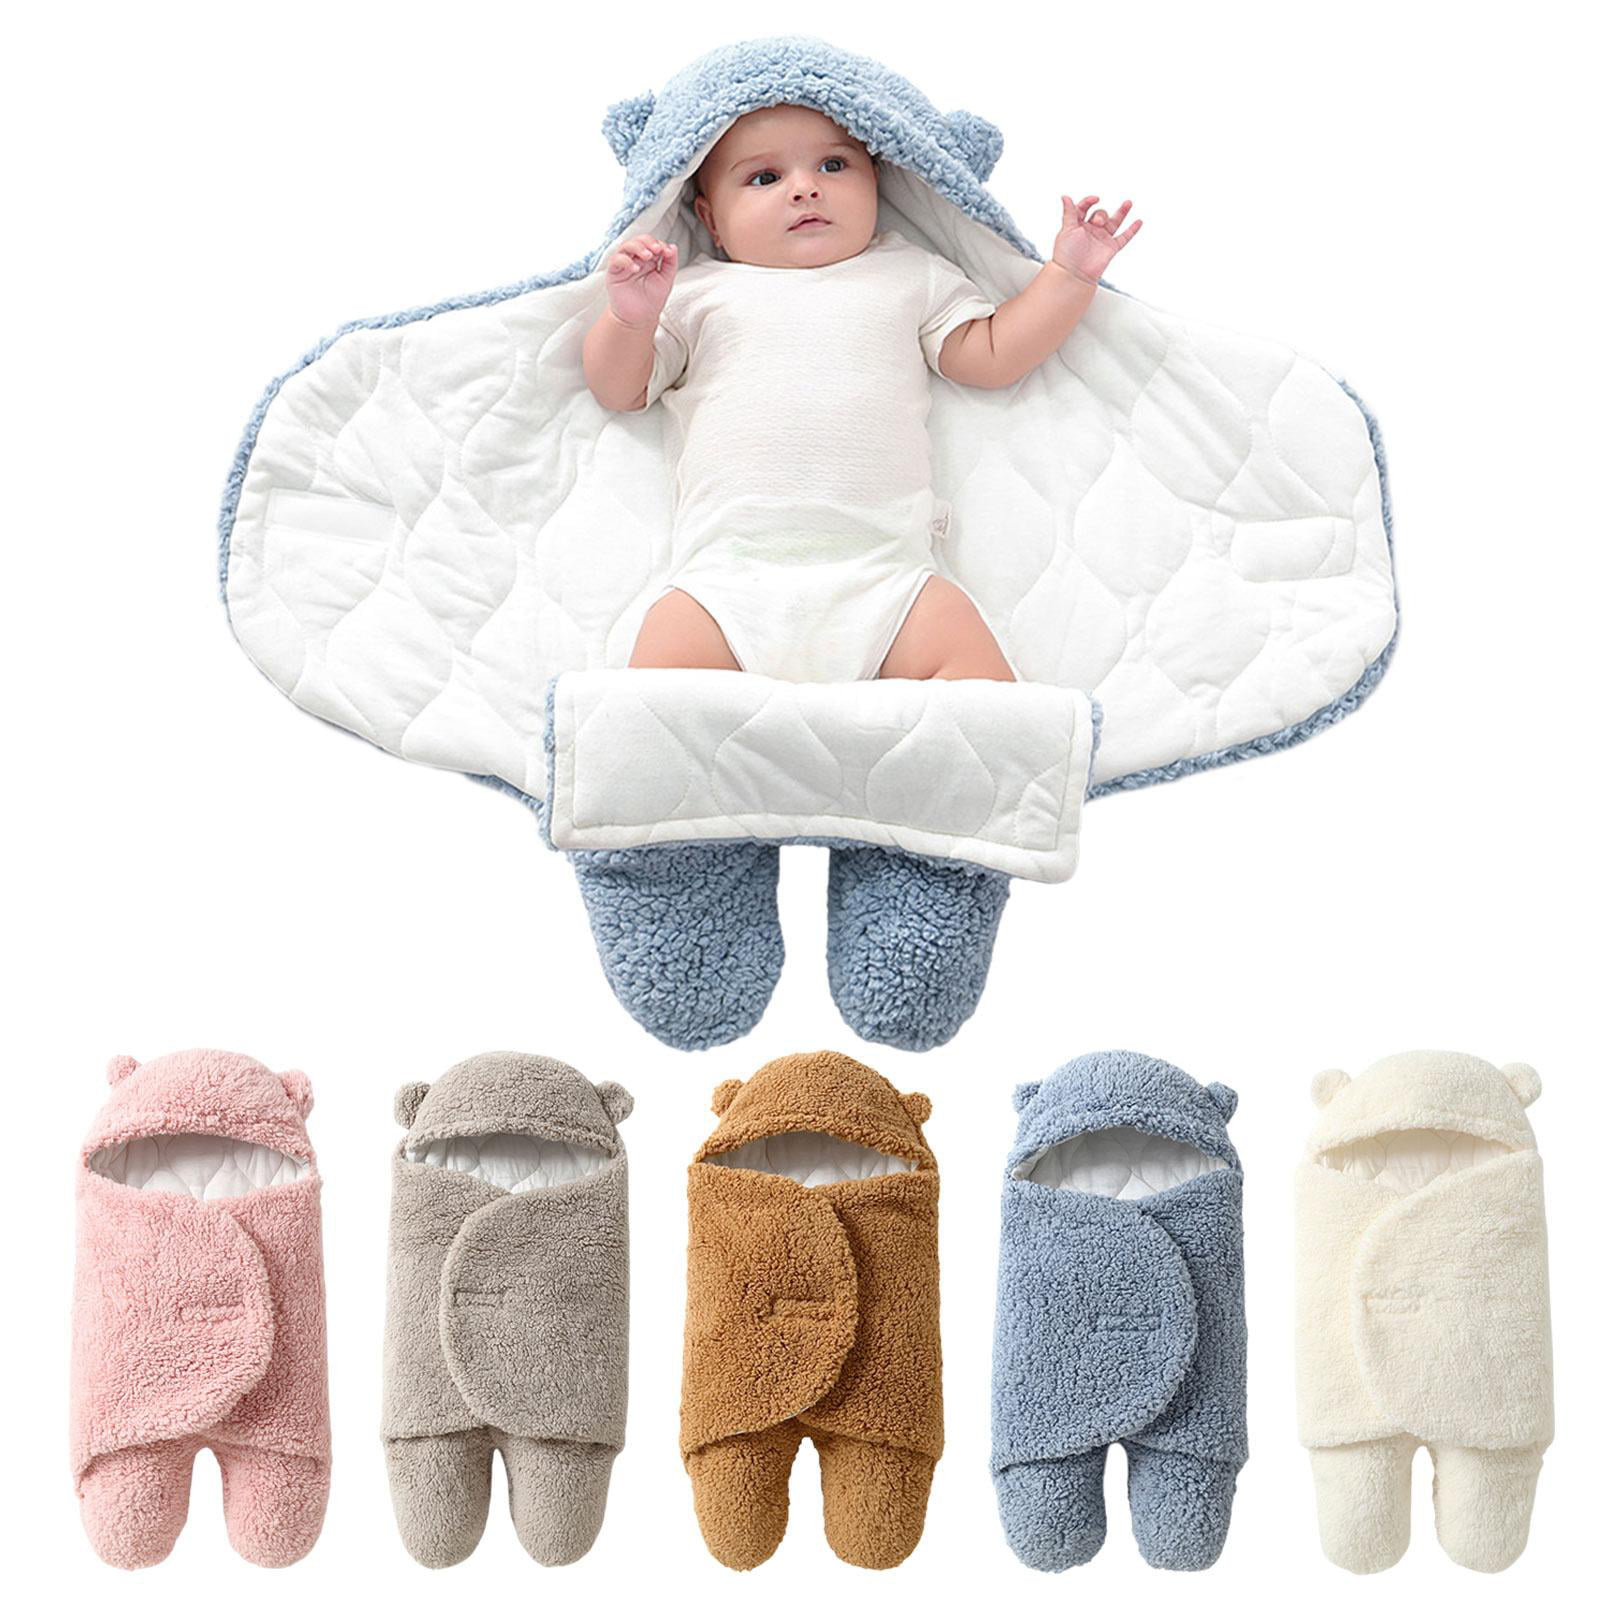 Baby newborn sleeping bag nap mats for 0-6 m warm and soft elephant chevron 